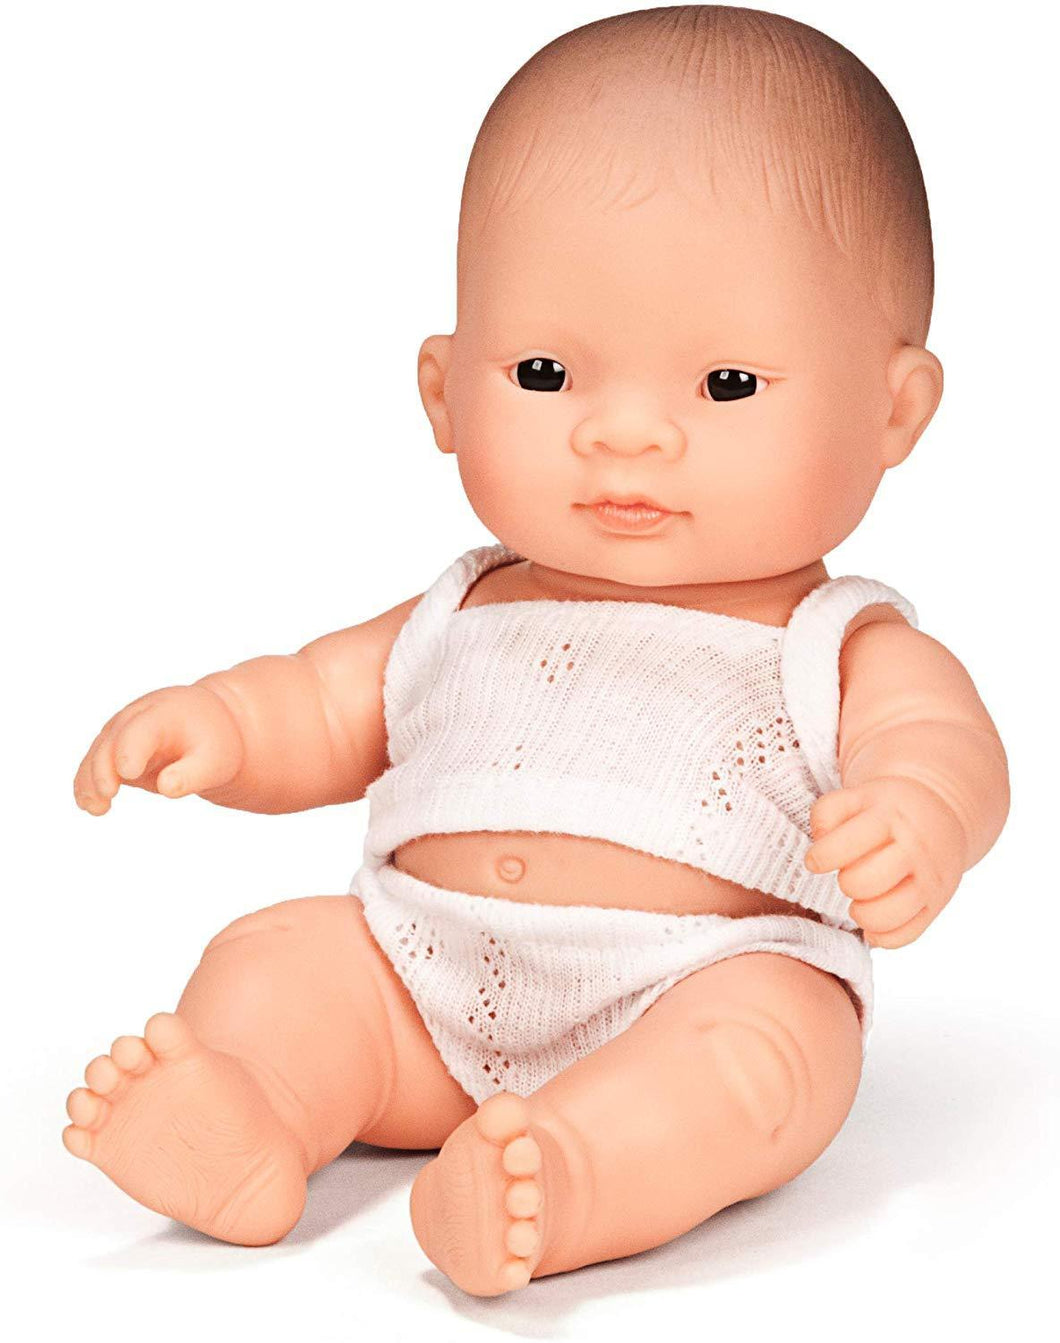 Anatomically Correct Newborn Doll - 8 1/4